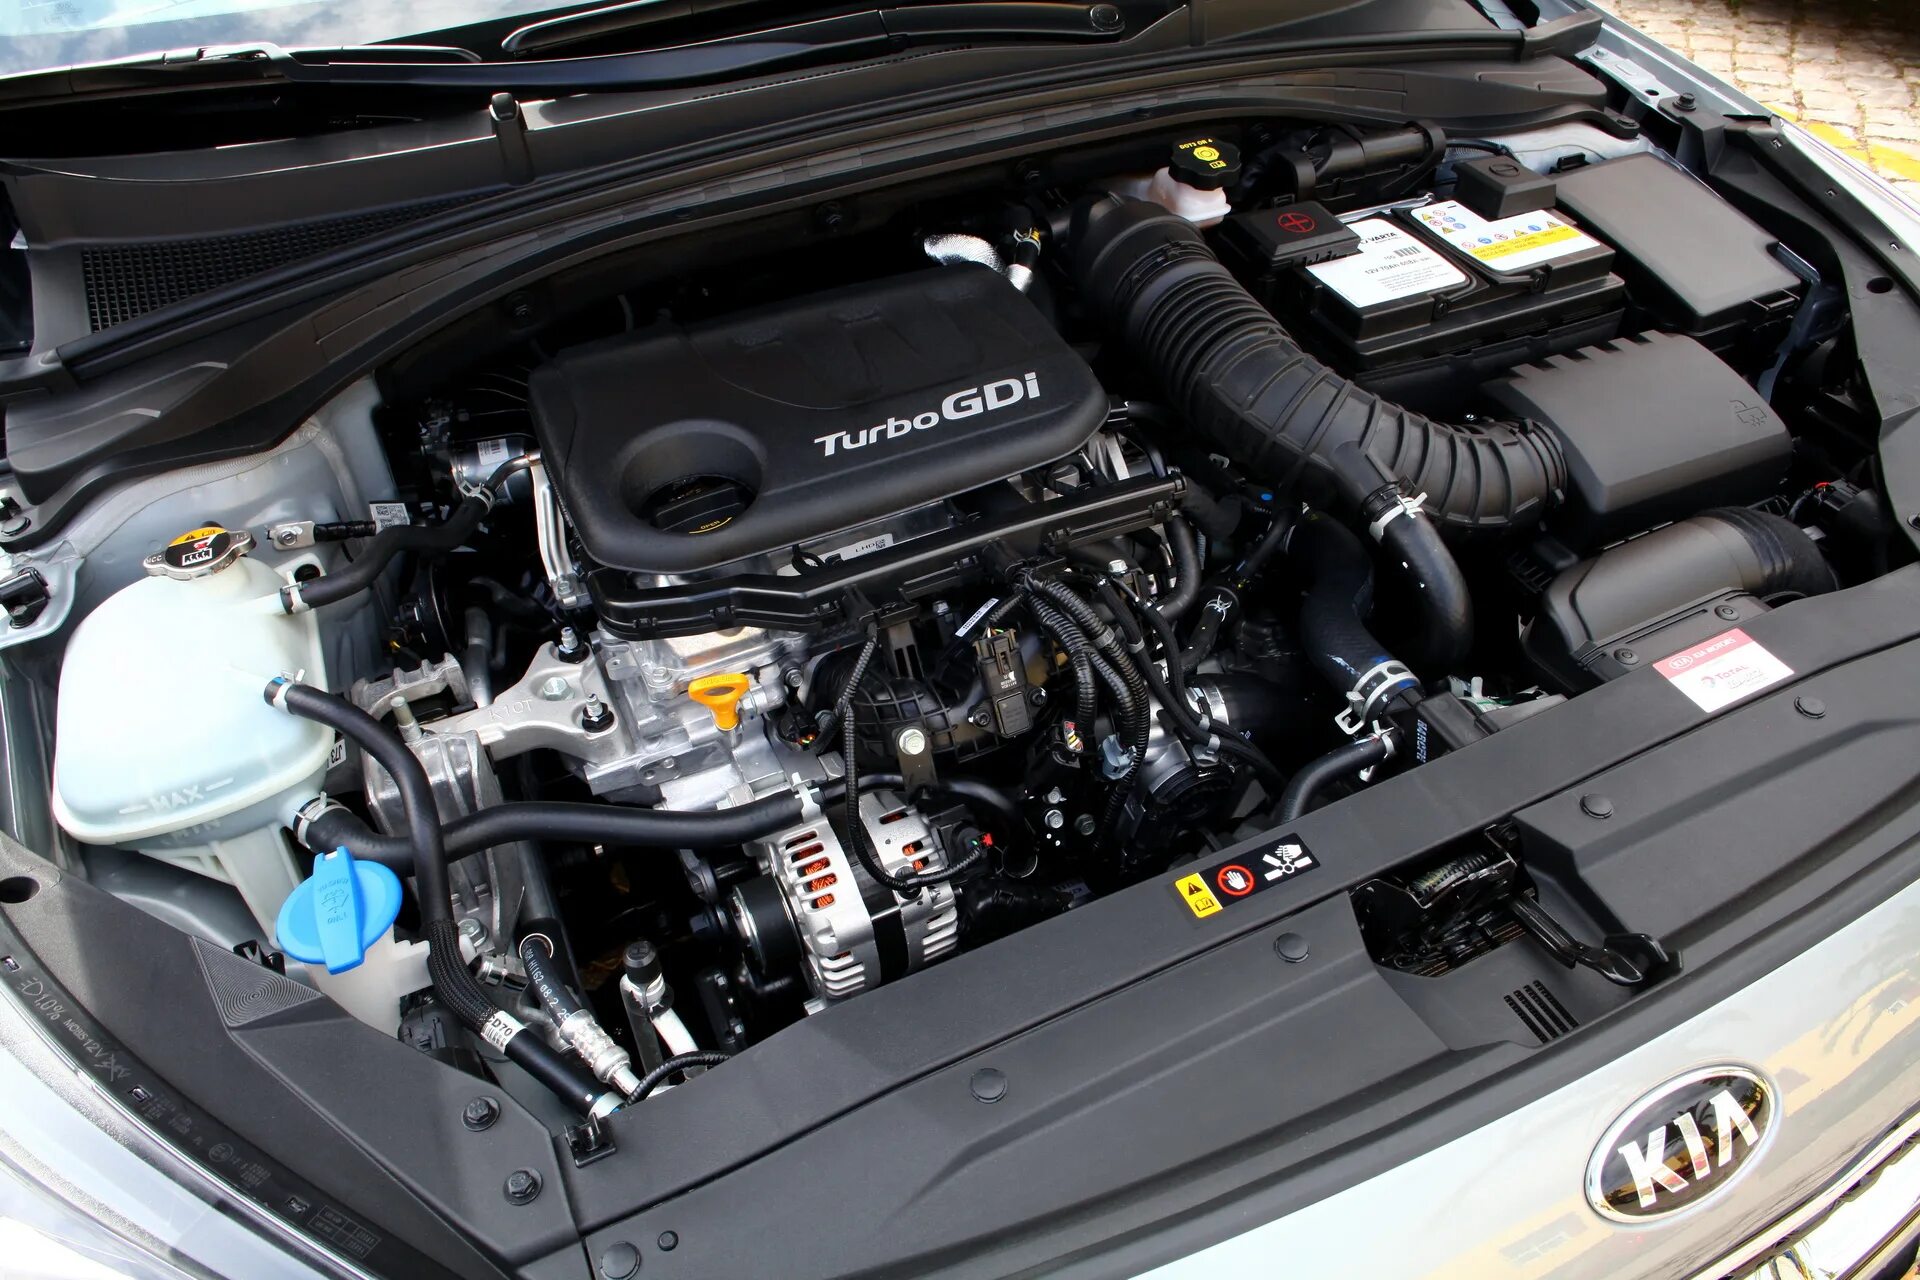 Двигатель нового сид. Kia Ceed 2013 под капотом. Kia Ceed GDI 1.6. Kia Ceed 2007 под капотом. Двигатель Kia Ceed 2013.